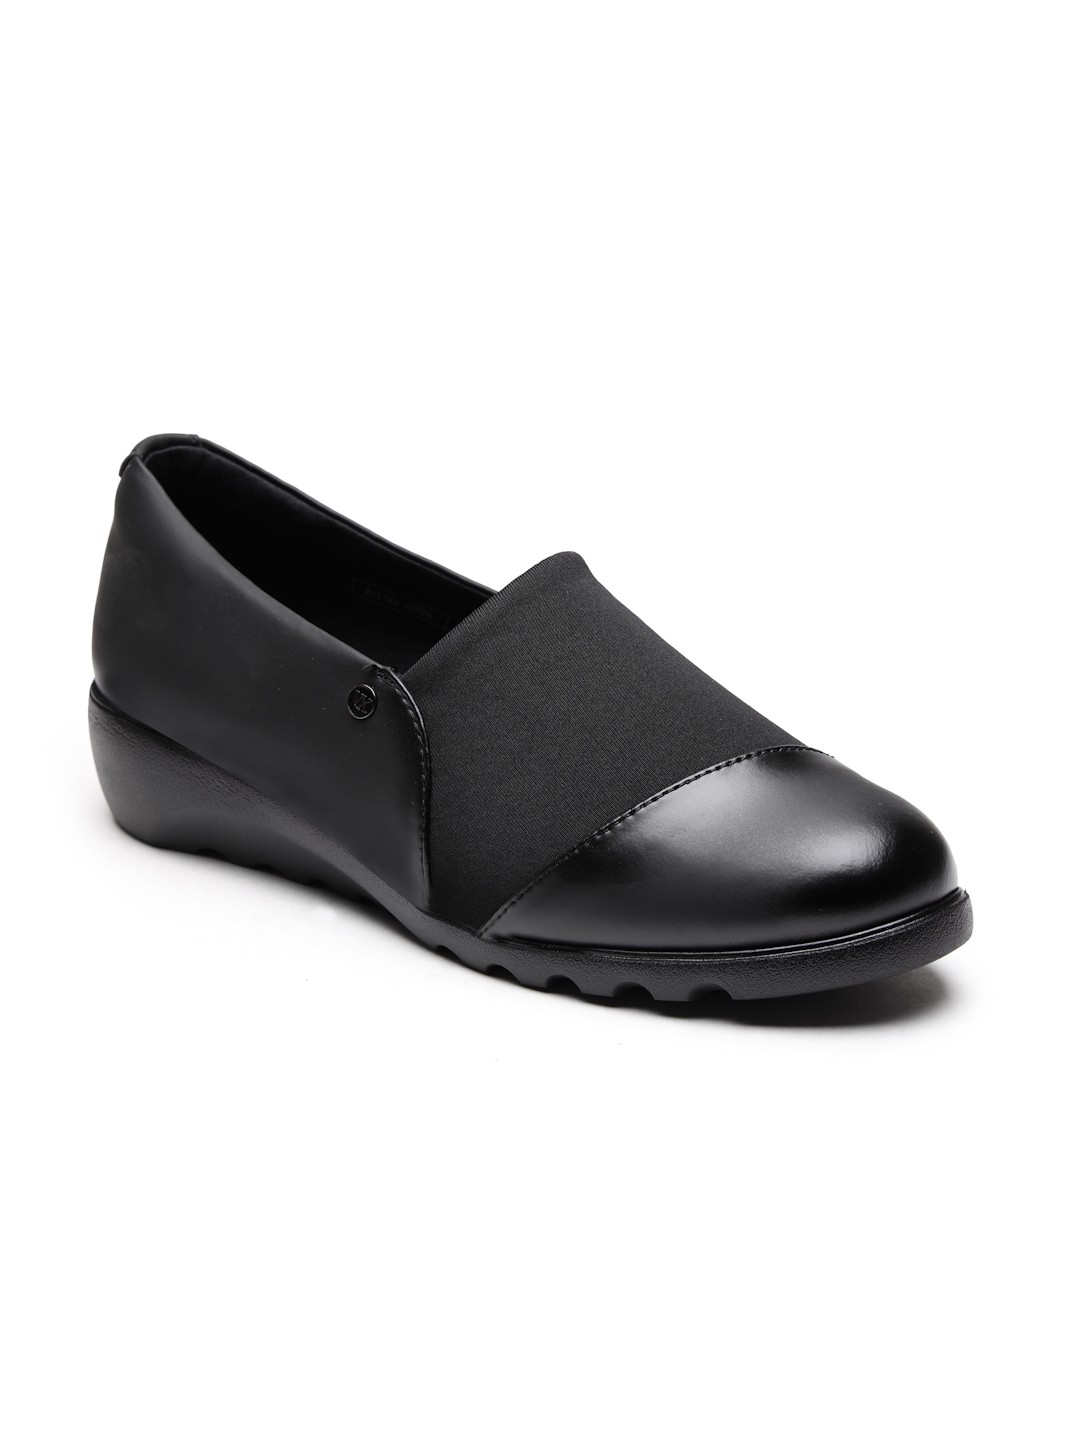 Buy Von Wellx Germany Comfort Women's Black Casual Shoes Ayla Online in Tamil Nadu